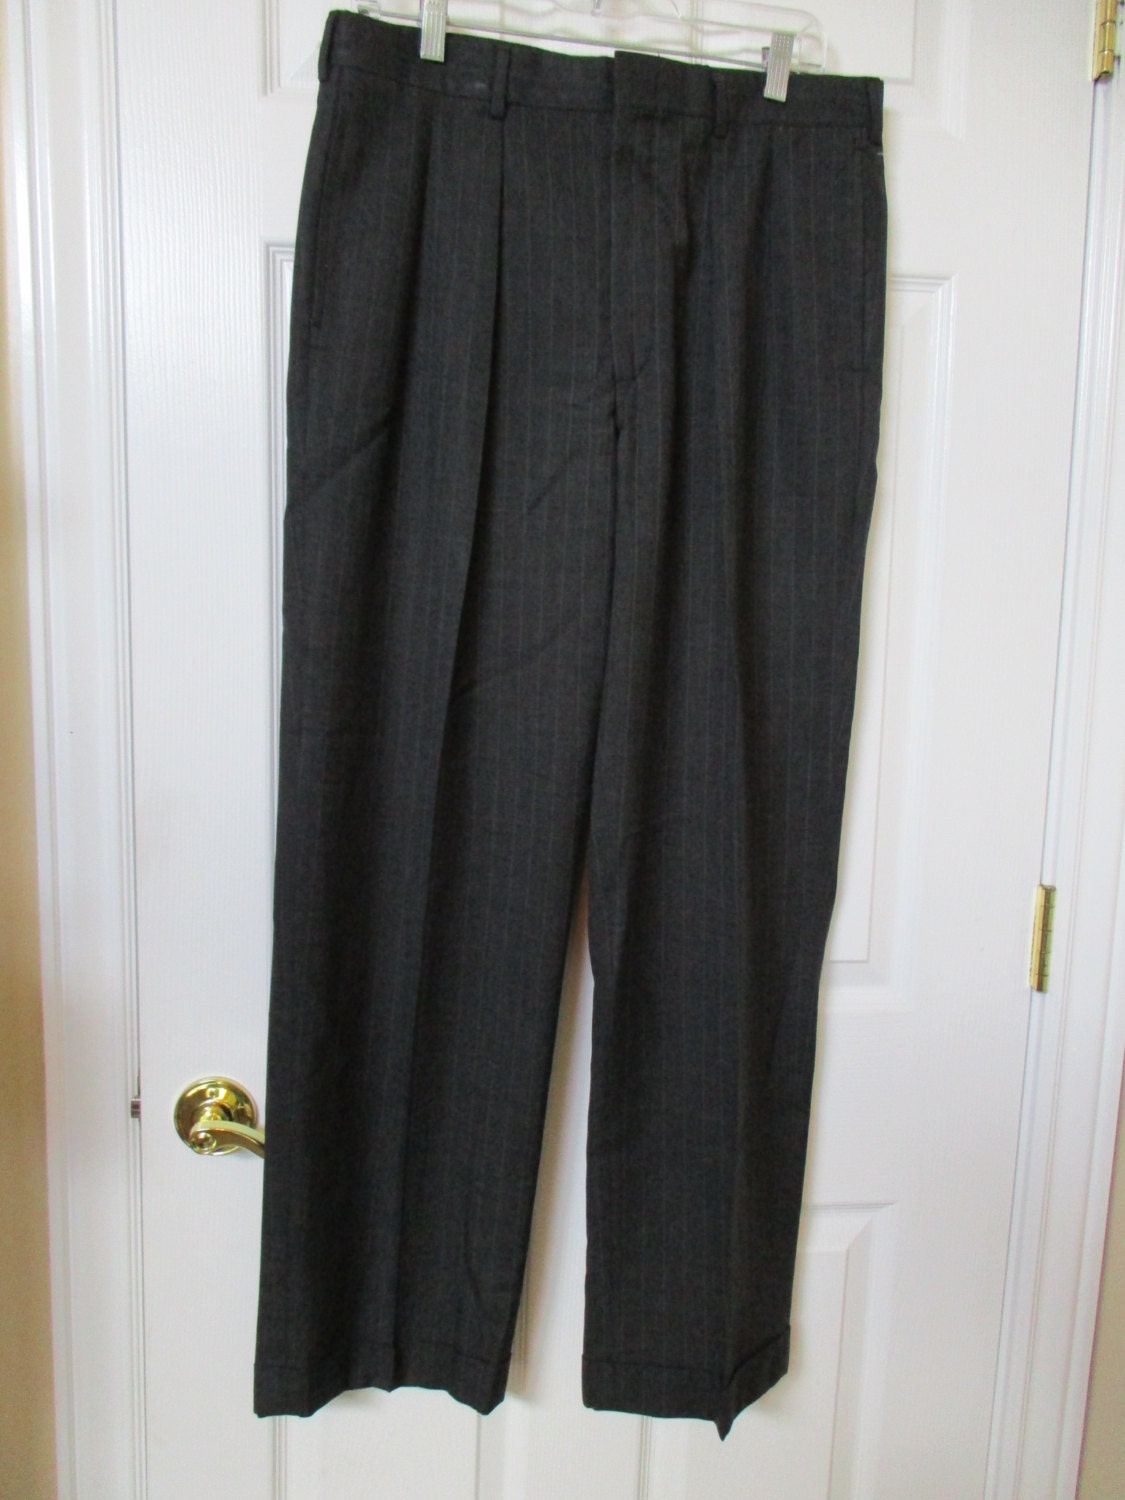 Vintage Brooks Brothers pants/slacks size 32X30 dark gray with light ...